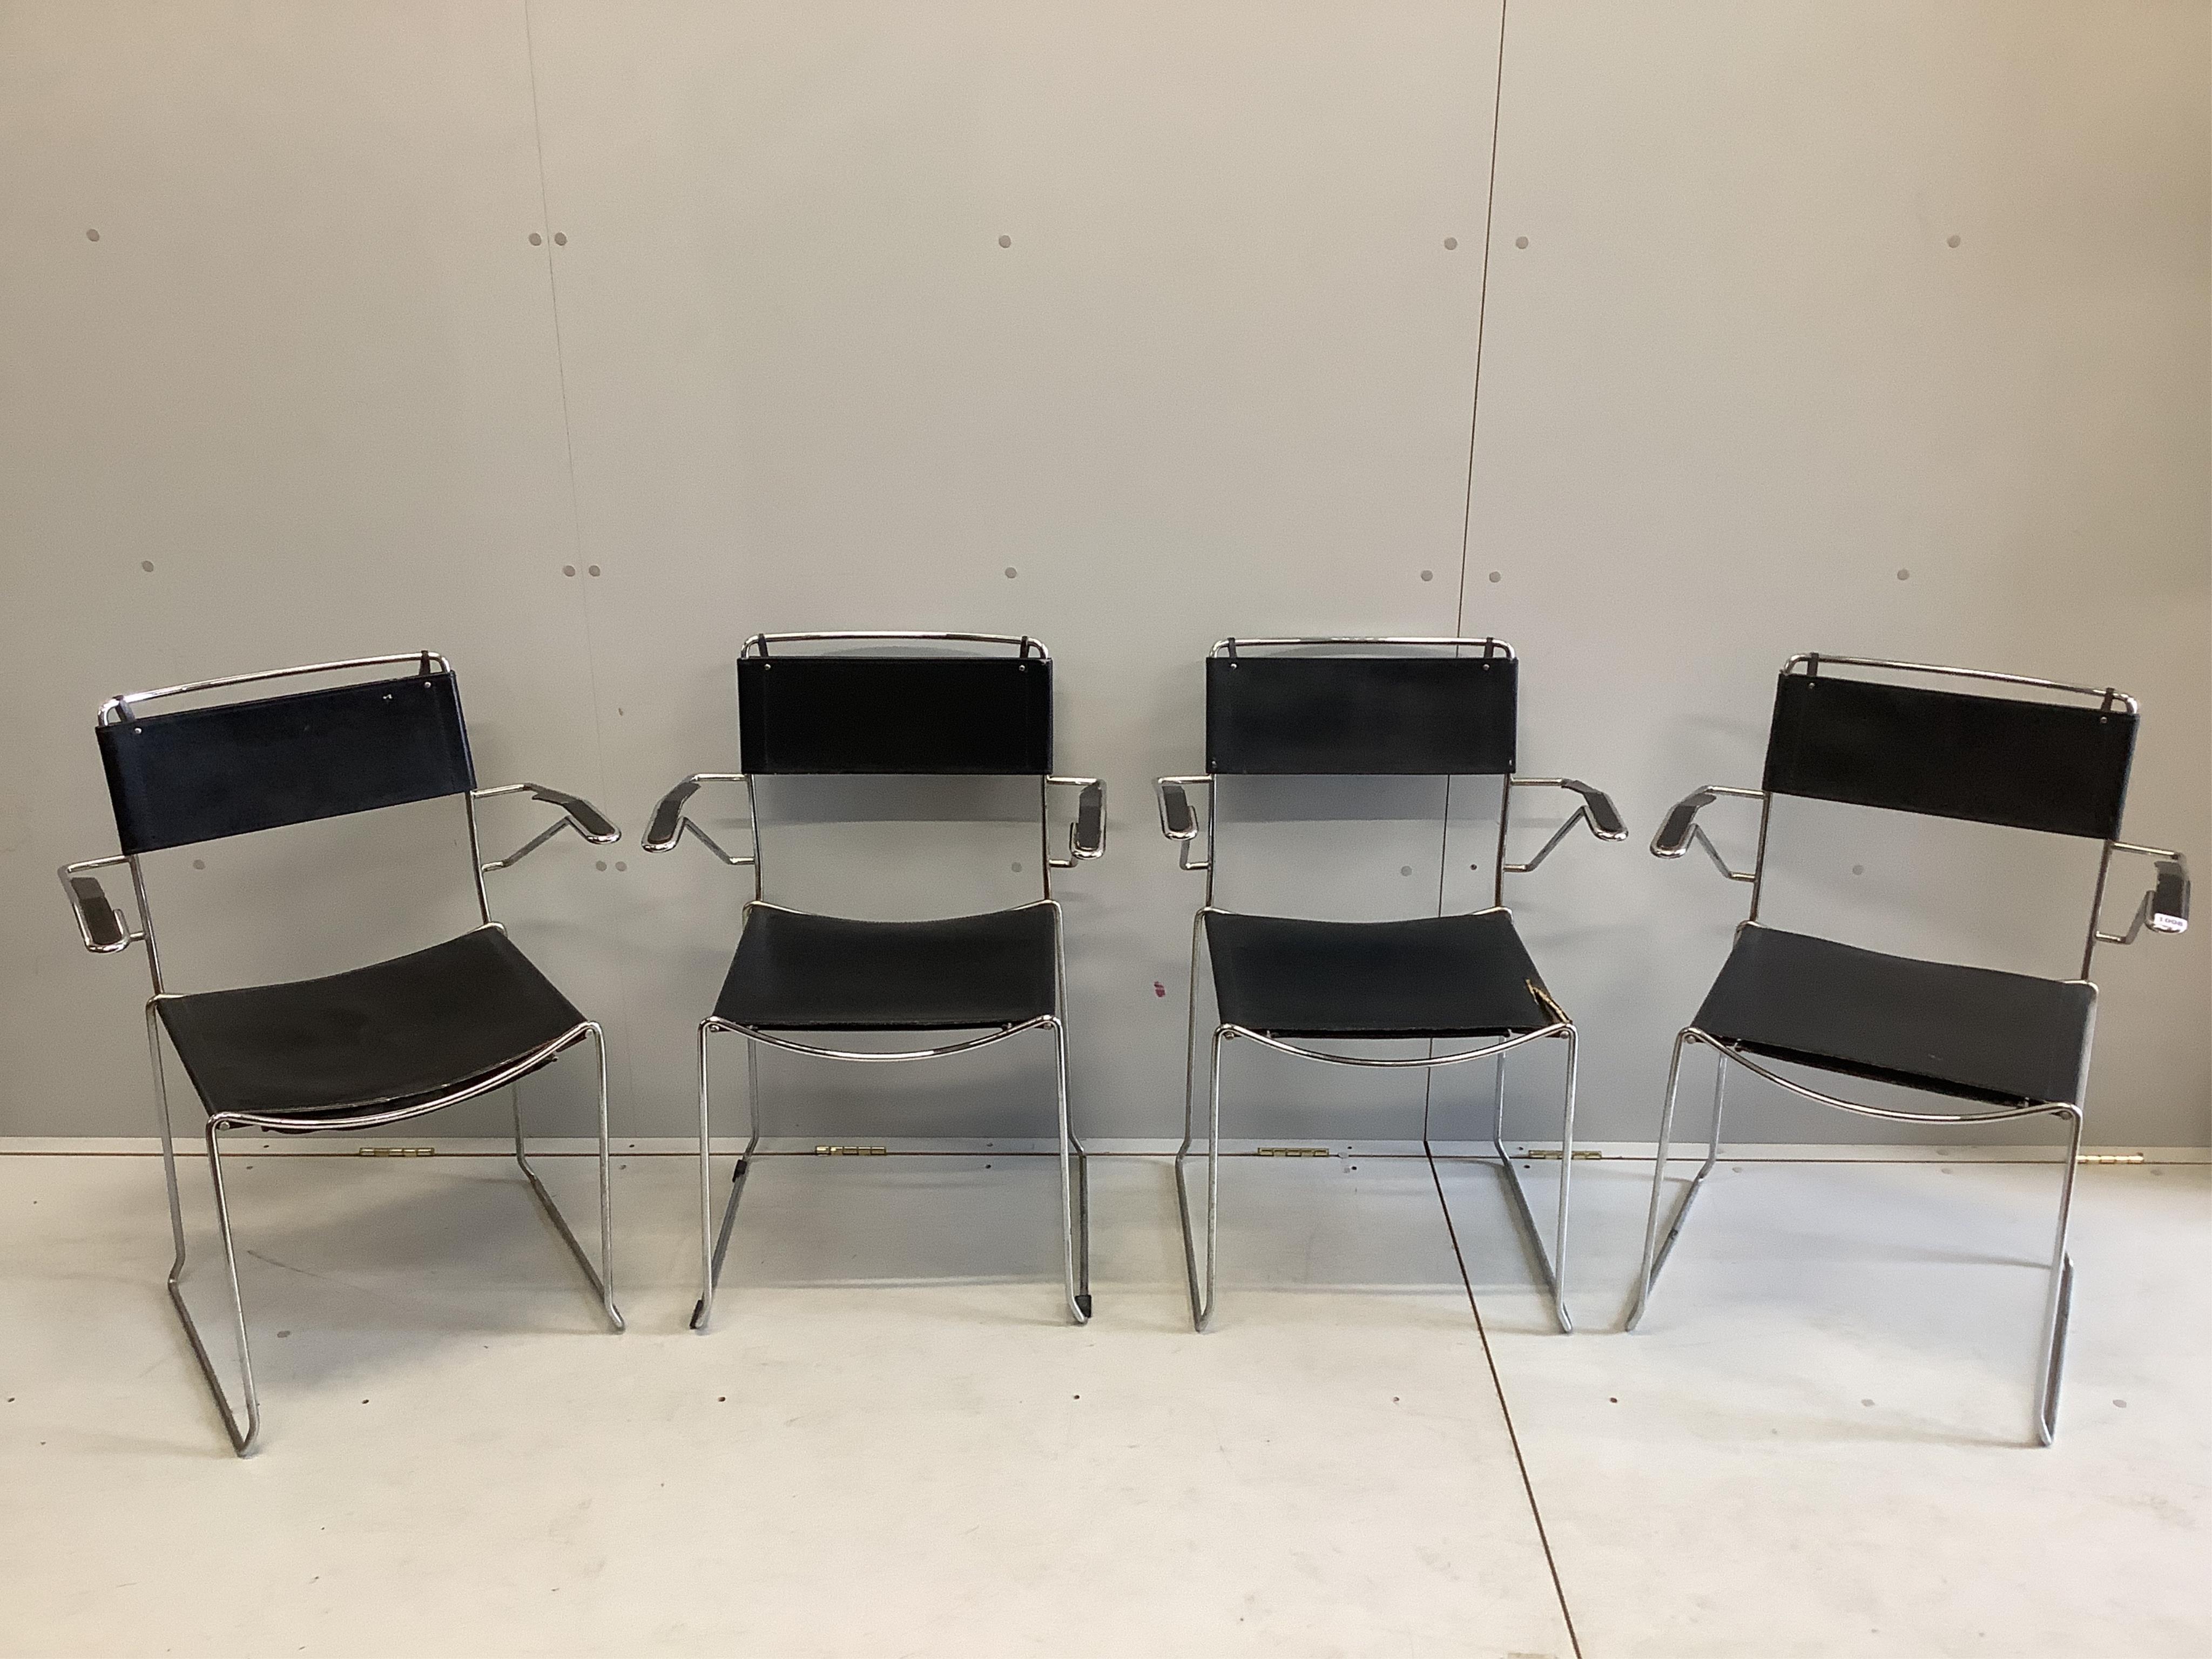 Four vintage Italian Giandomenico Belotti dining chairs, width 37cm, depth 39cm, height 81cm